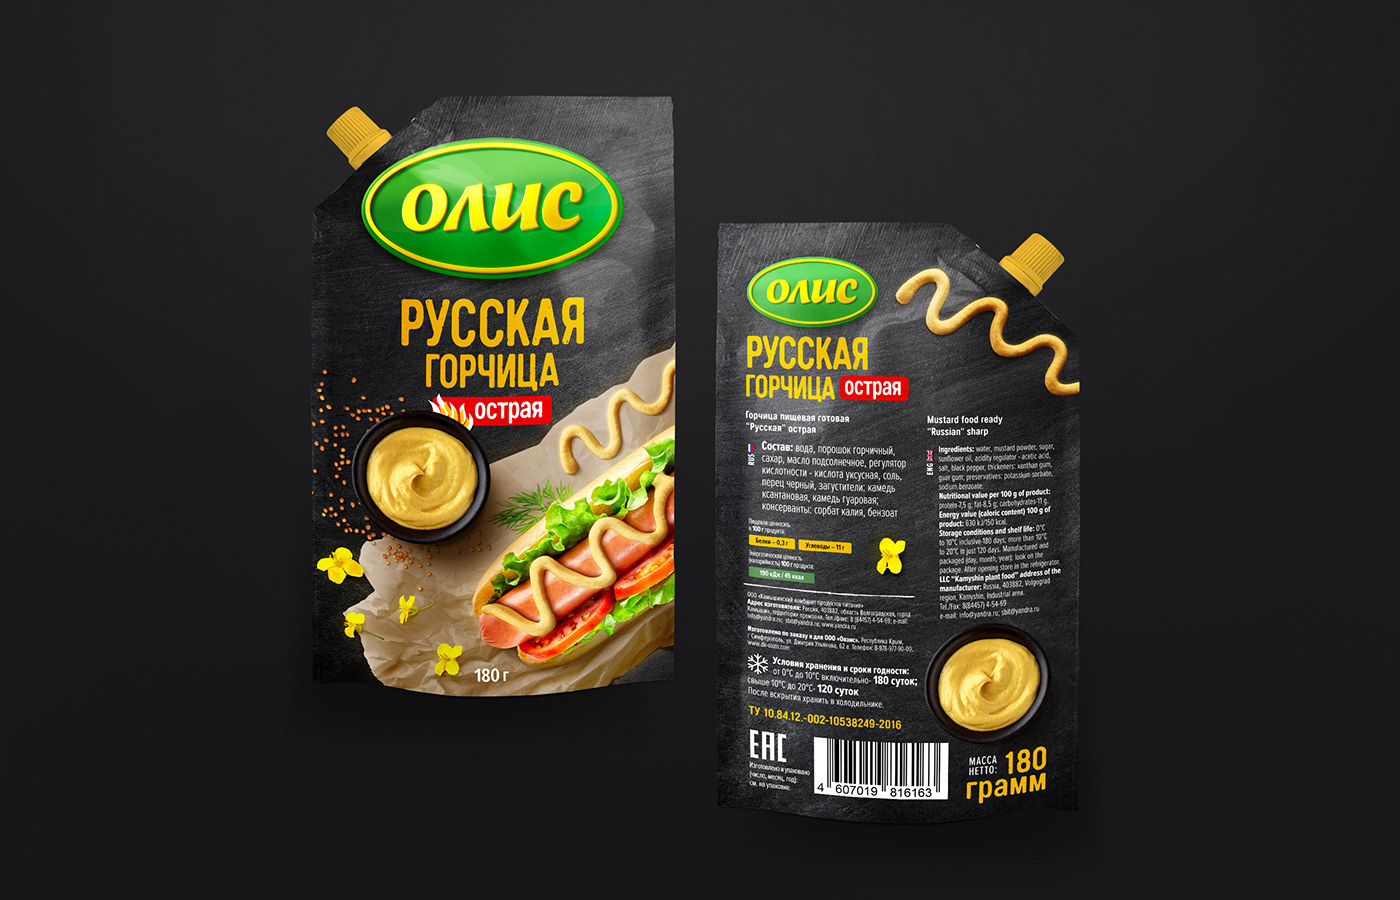 ketchup Label mayonnaise mustard olis Olive Oil Packaging Retail